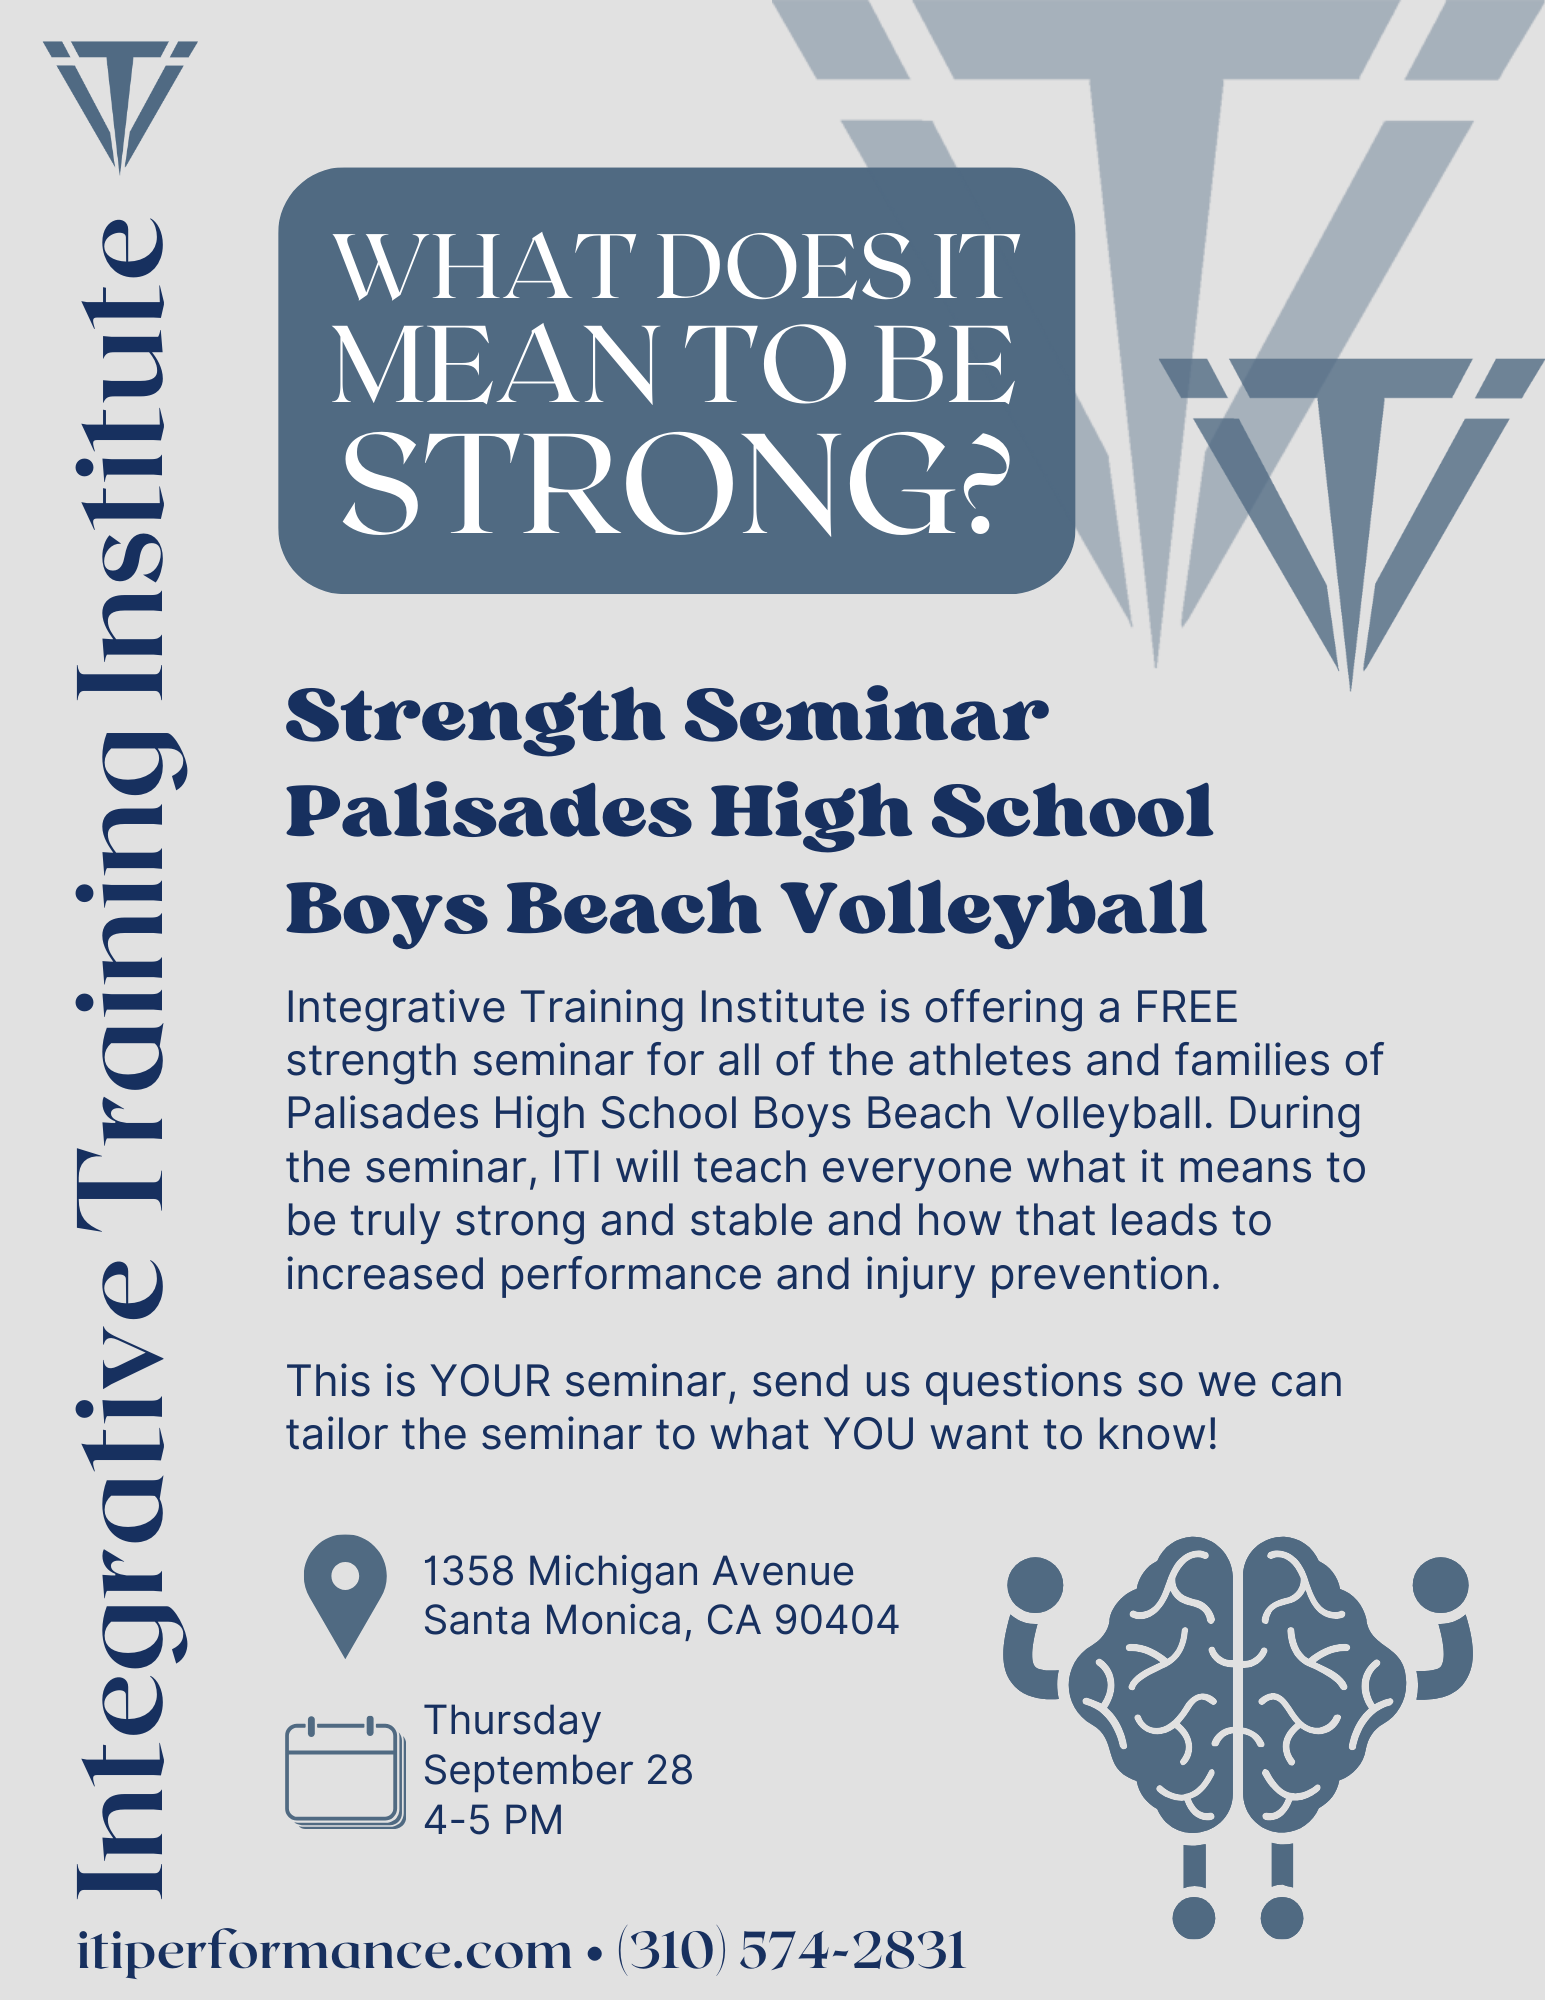 Strength Seminar with Palisades High School Boys Beach Volleyball Team